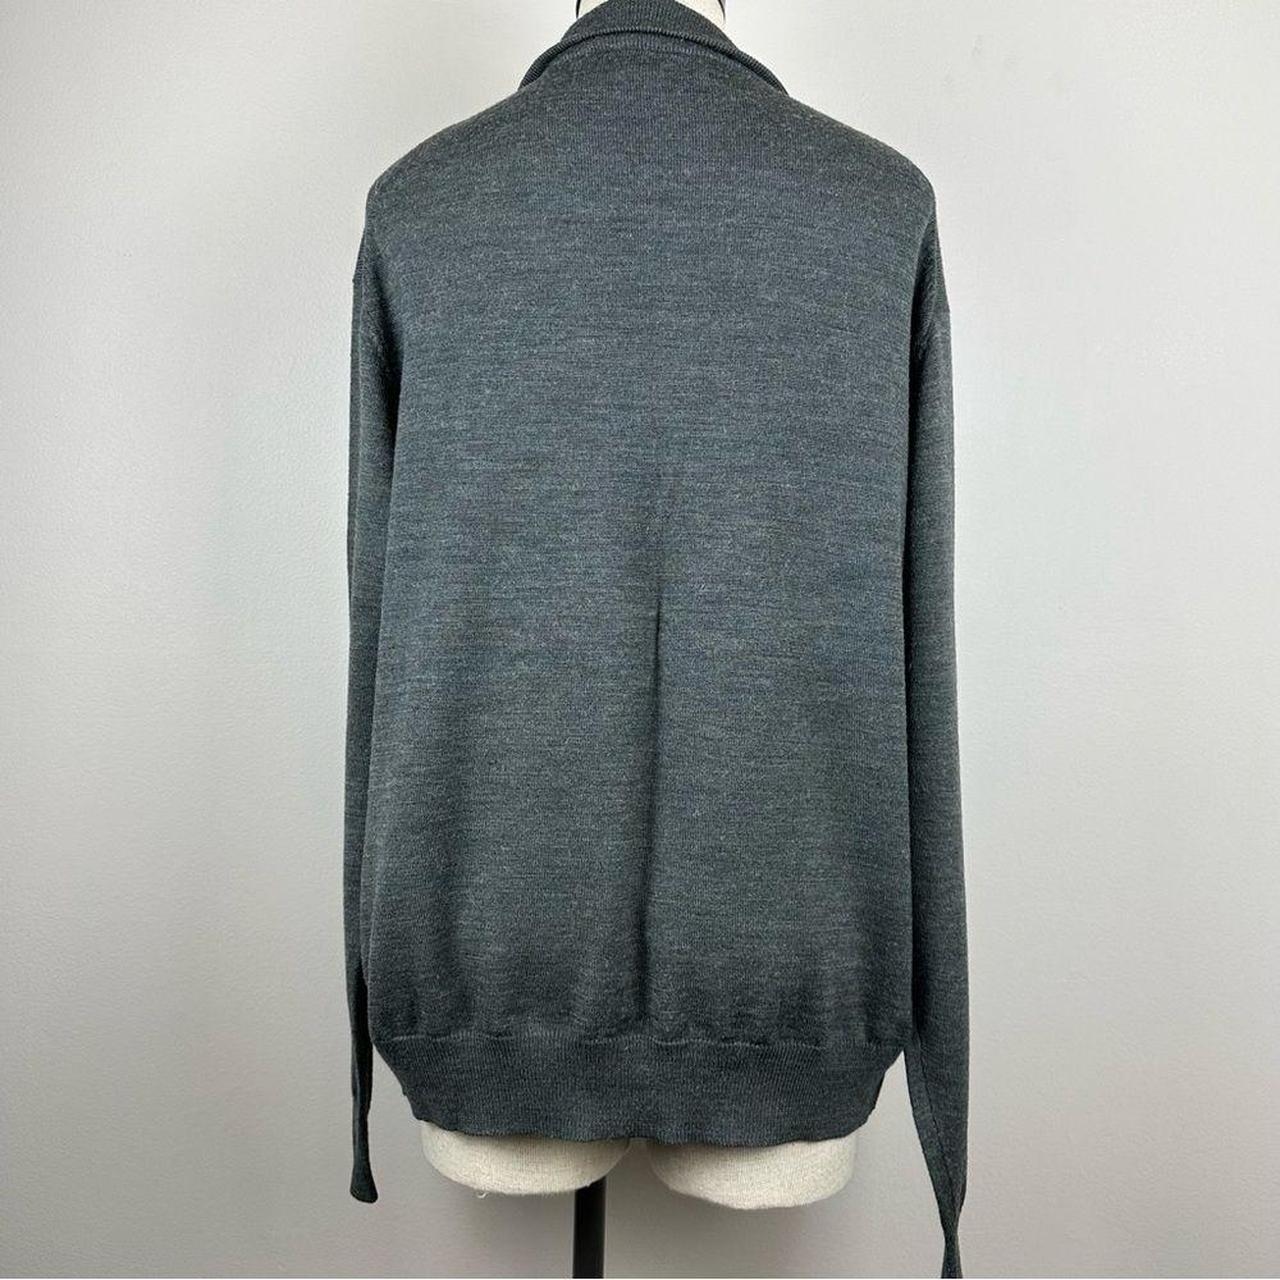 This stunning 90s merino wool blend 1/4 zip sweater... - Depop